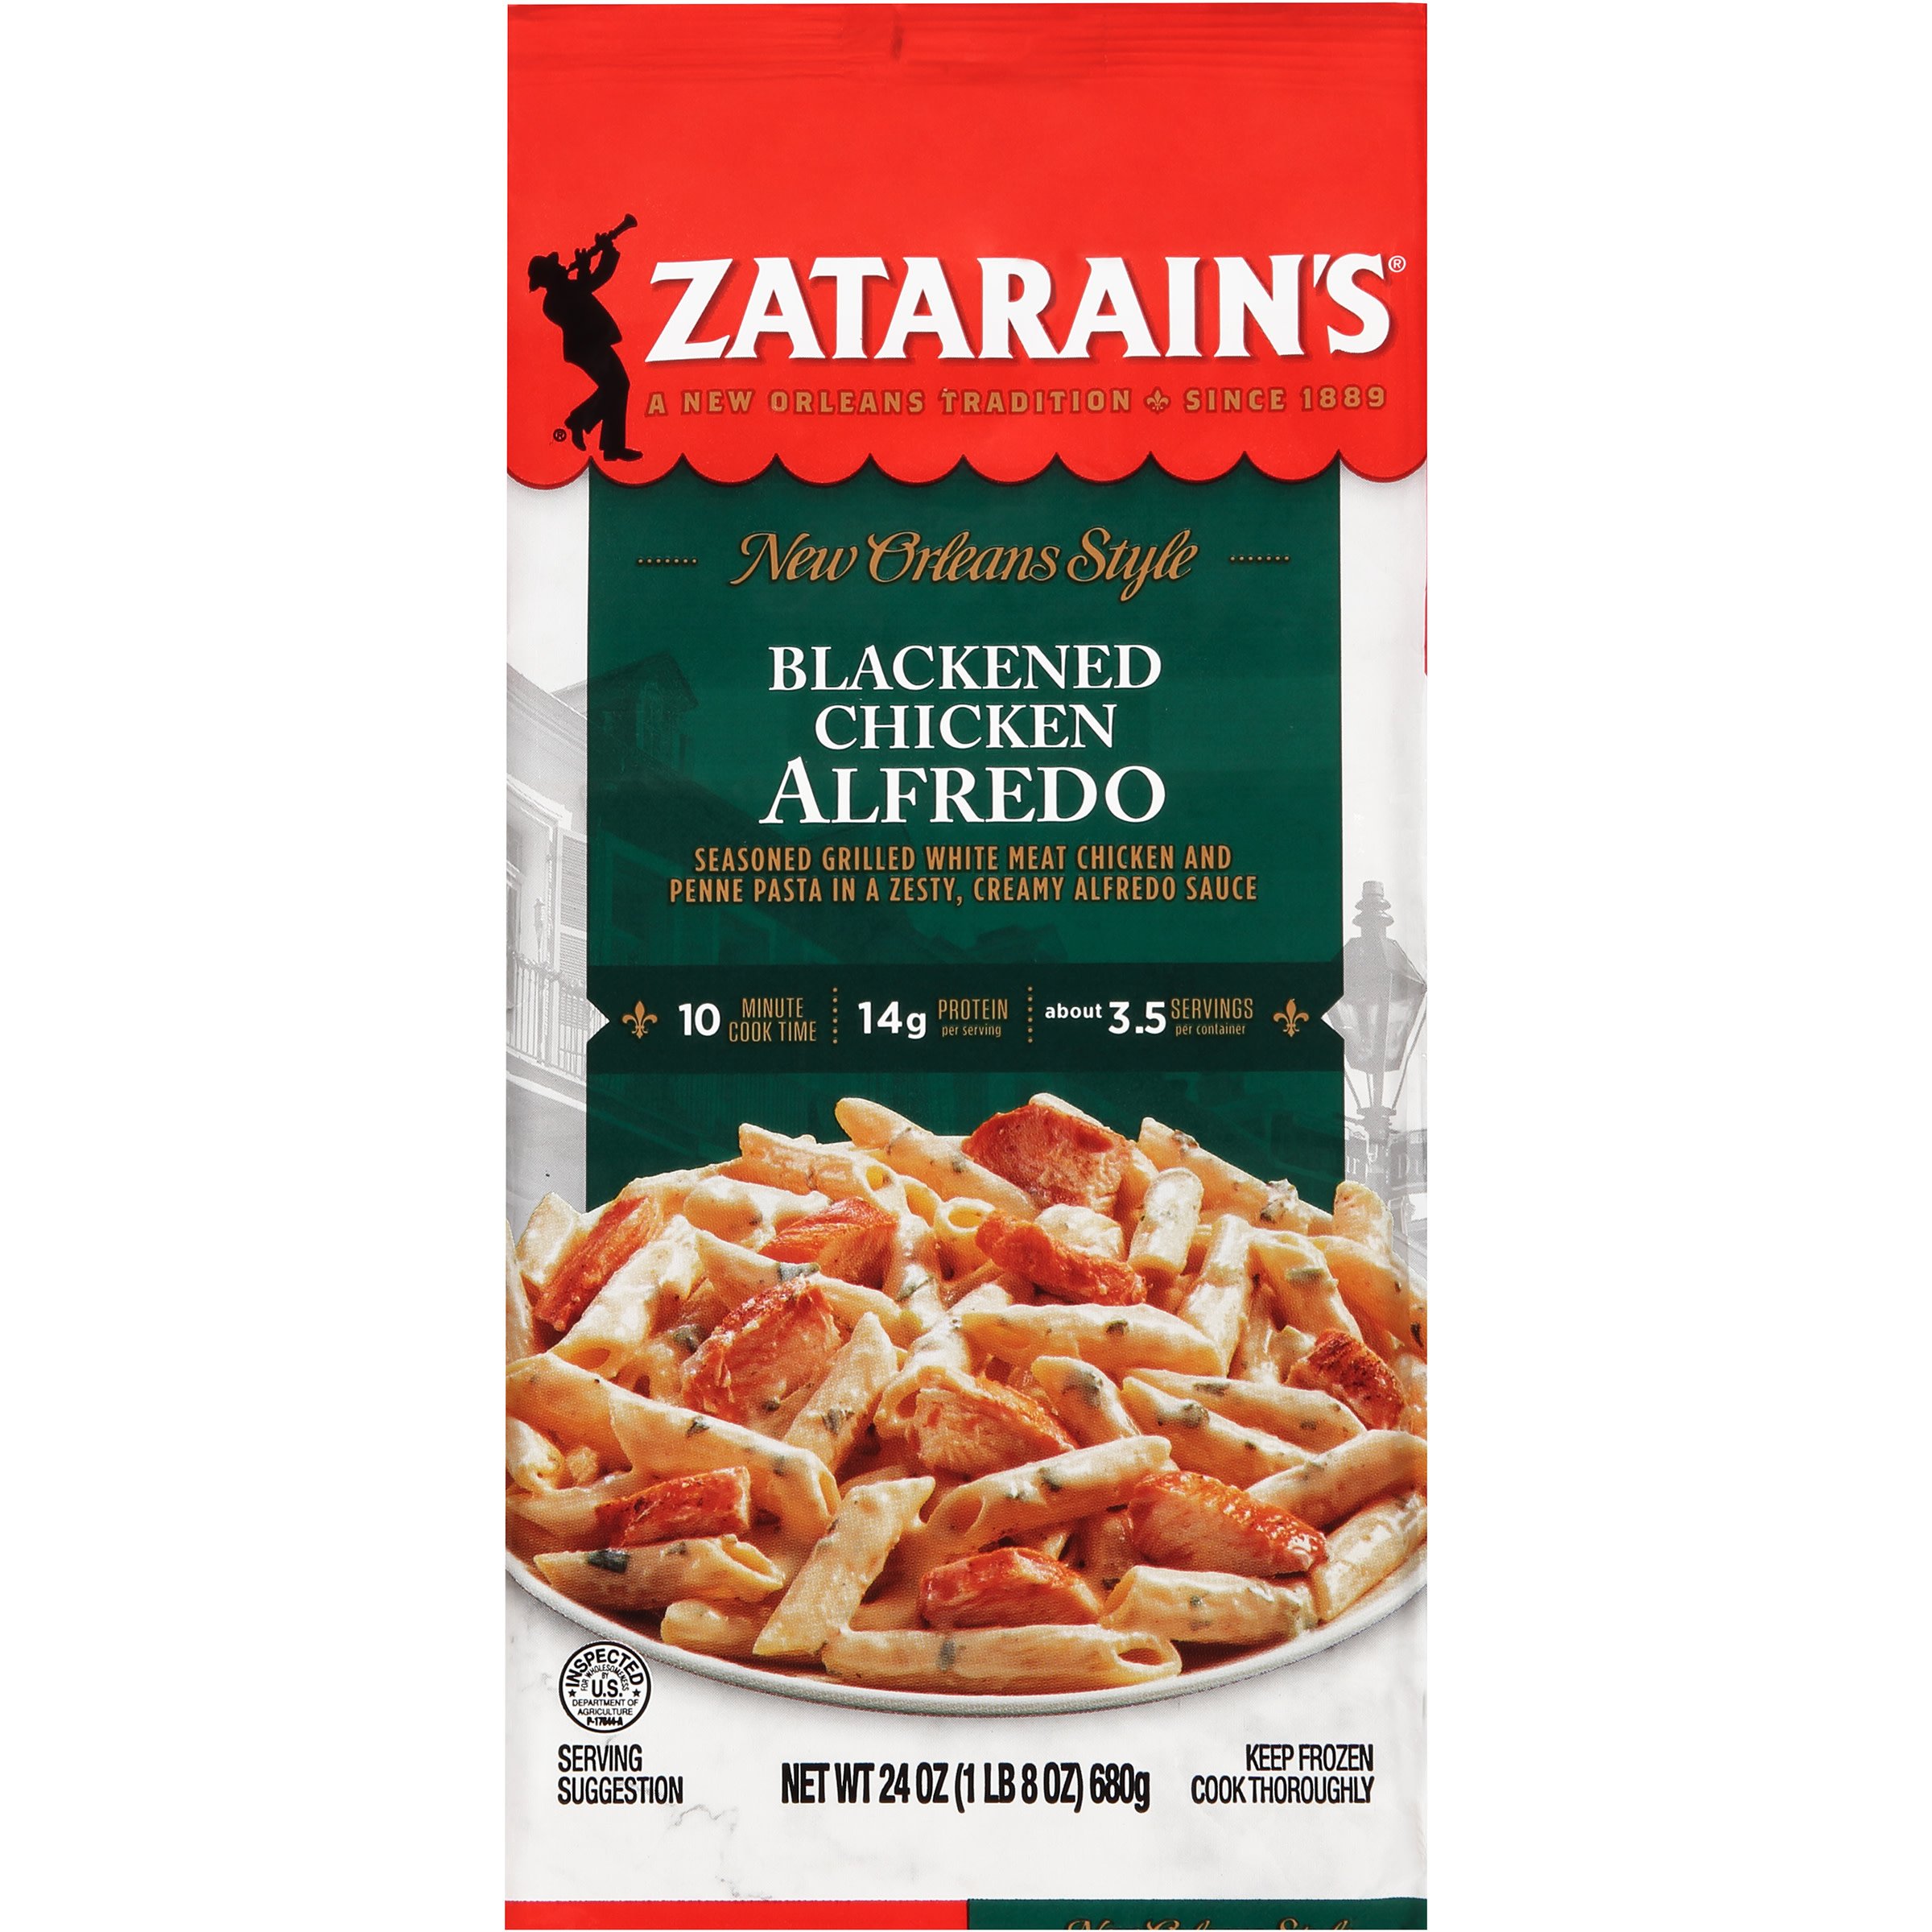 Zatarains Blackened Chicken Alfredo - Overall pretty good. The